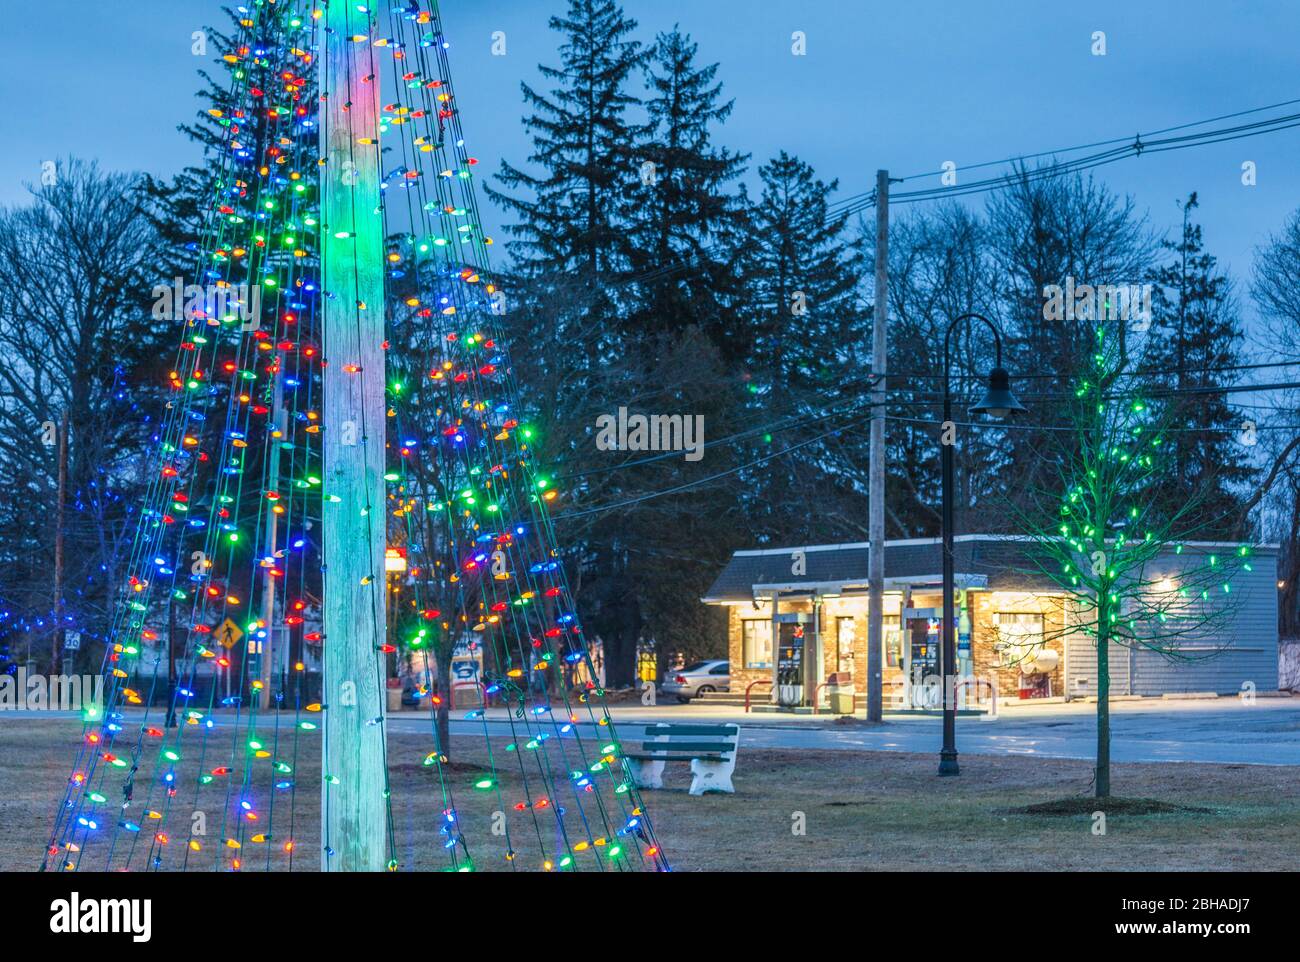 USA, New England, Massachusetts, Rowley, village Christmas tree decorations Stock Photo